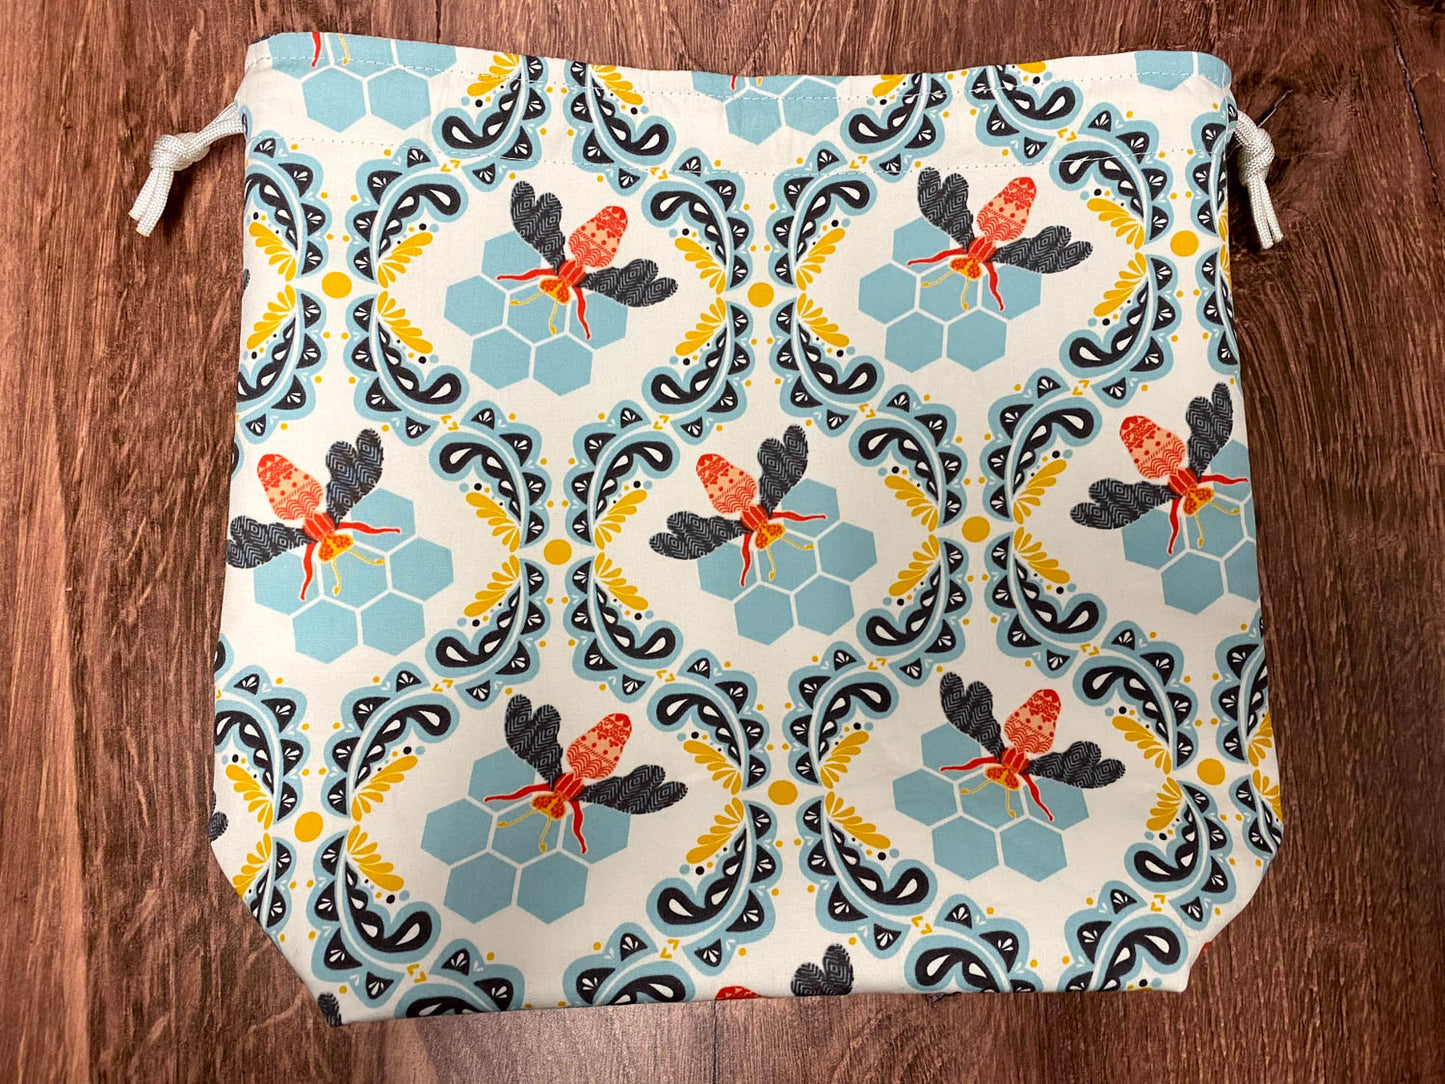 Bee Project Bag - Drawstring Bag – Knitting Bag – Crochet Bag - Craft Bag - Bingo Bag – Cross Stitch Bag - Floral